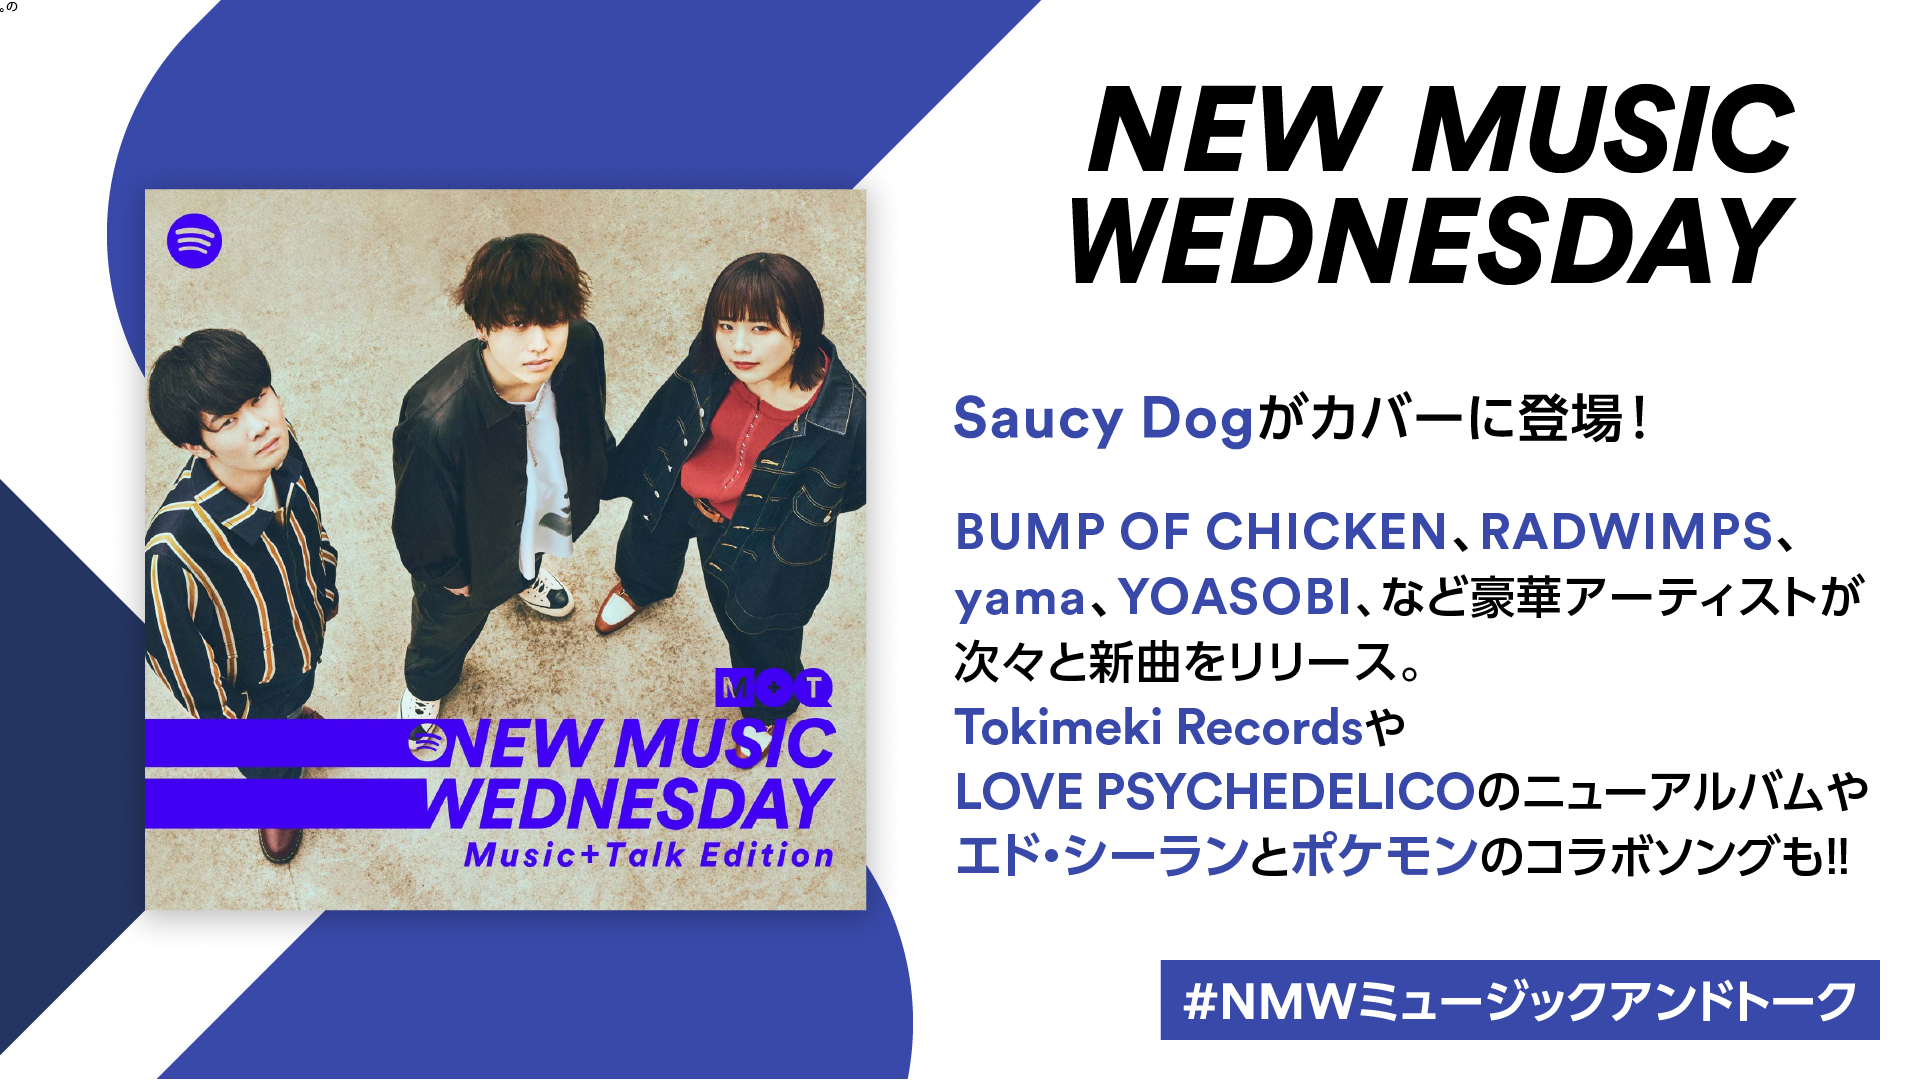 Saucy Dog Bump Of Chicken Radwimps Yoasobiらの新曲が続々リリース New Music Wednesday Music Talk Edition 今週注目の新作11曲を紹介 Spice エンタメ特化型情報メディア スパイス